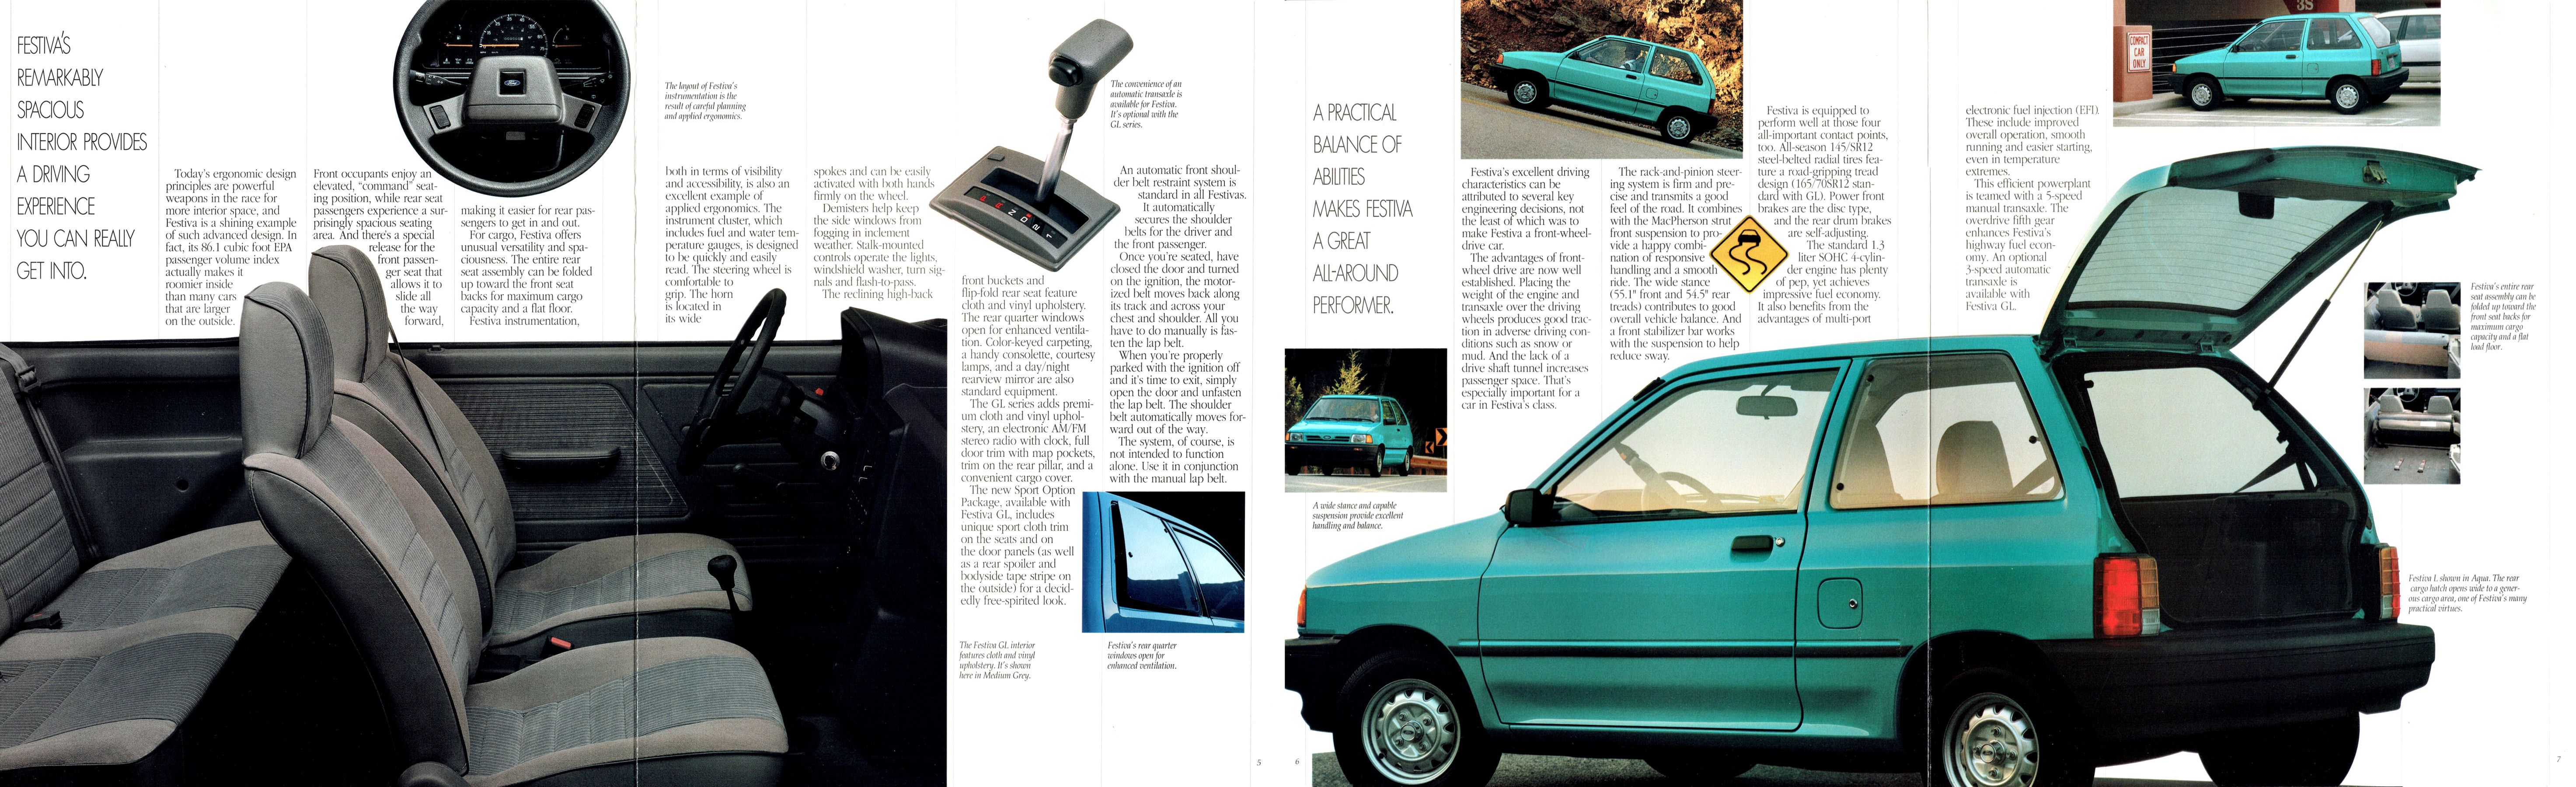 1992 Ford Festiva-Side B